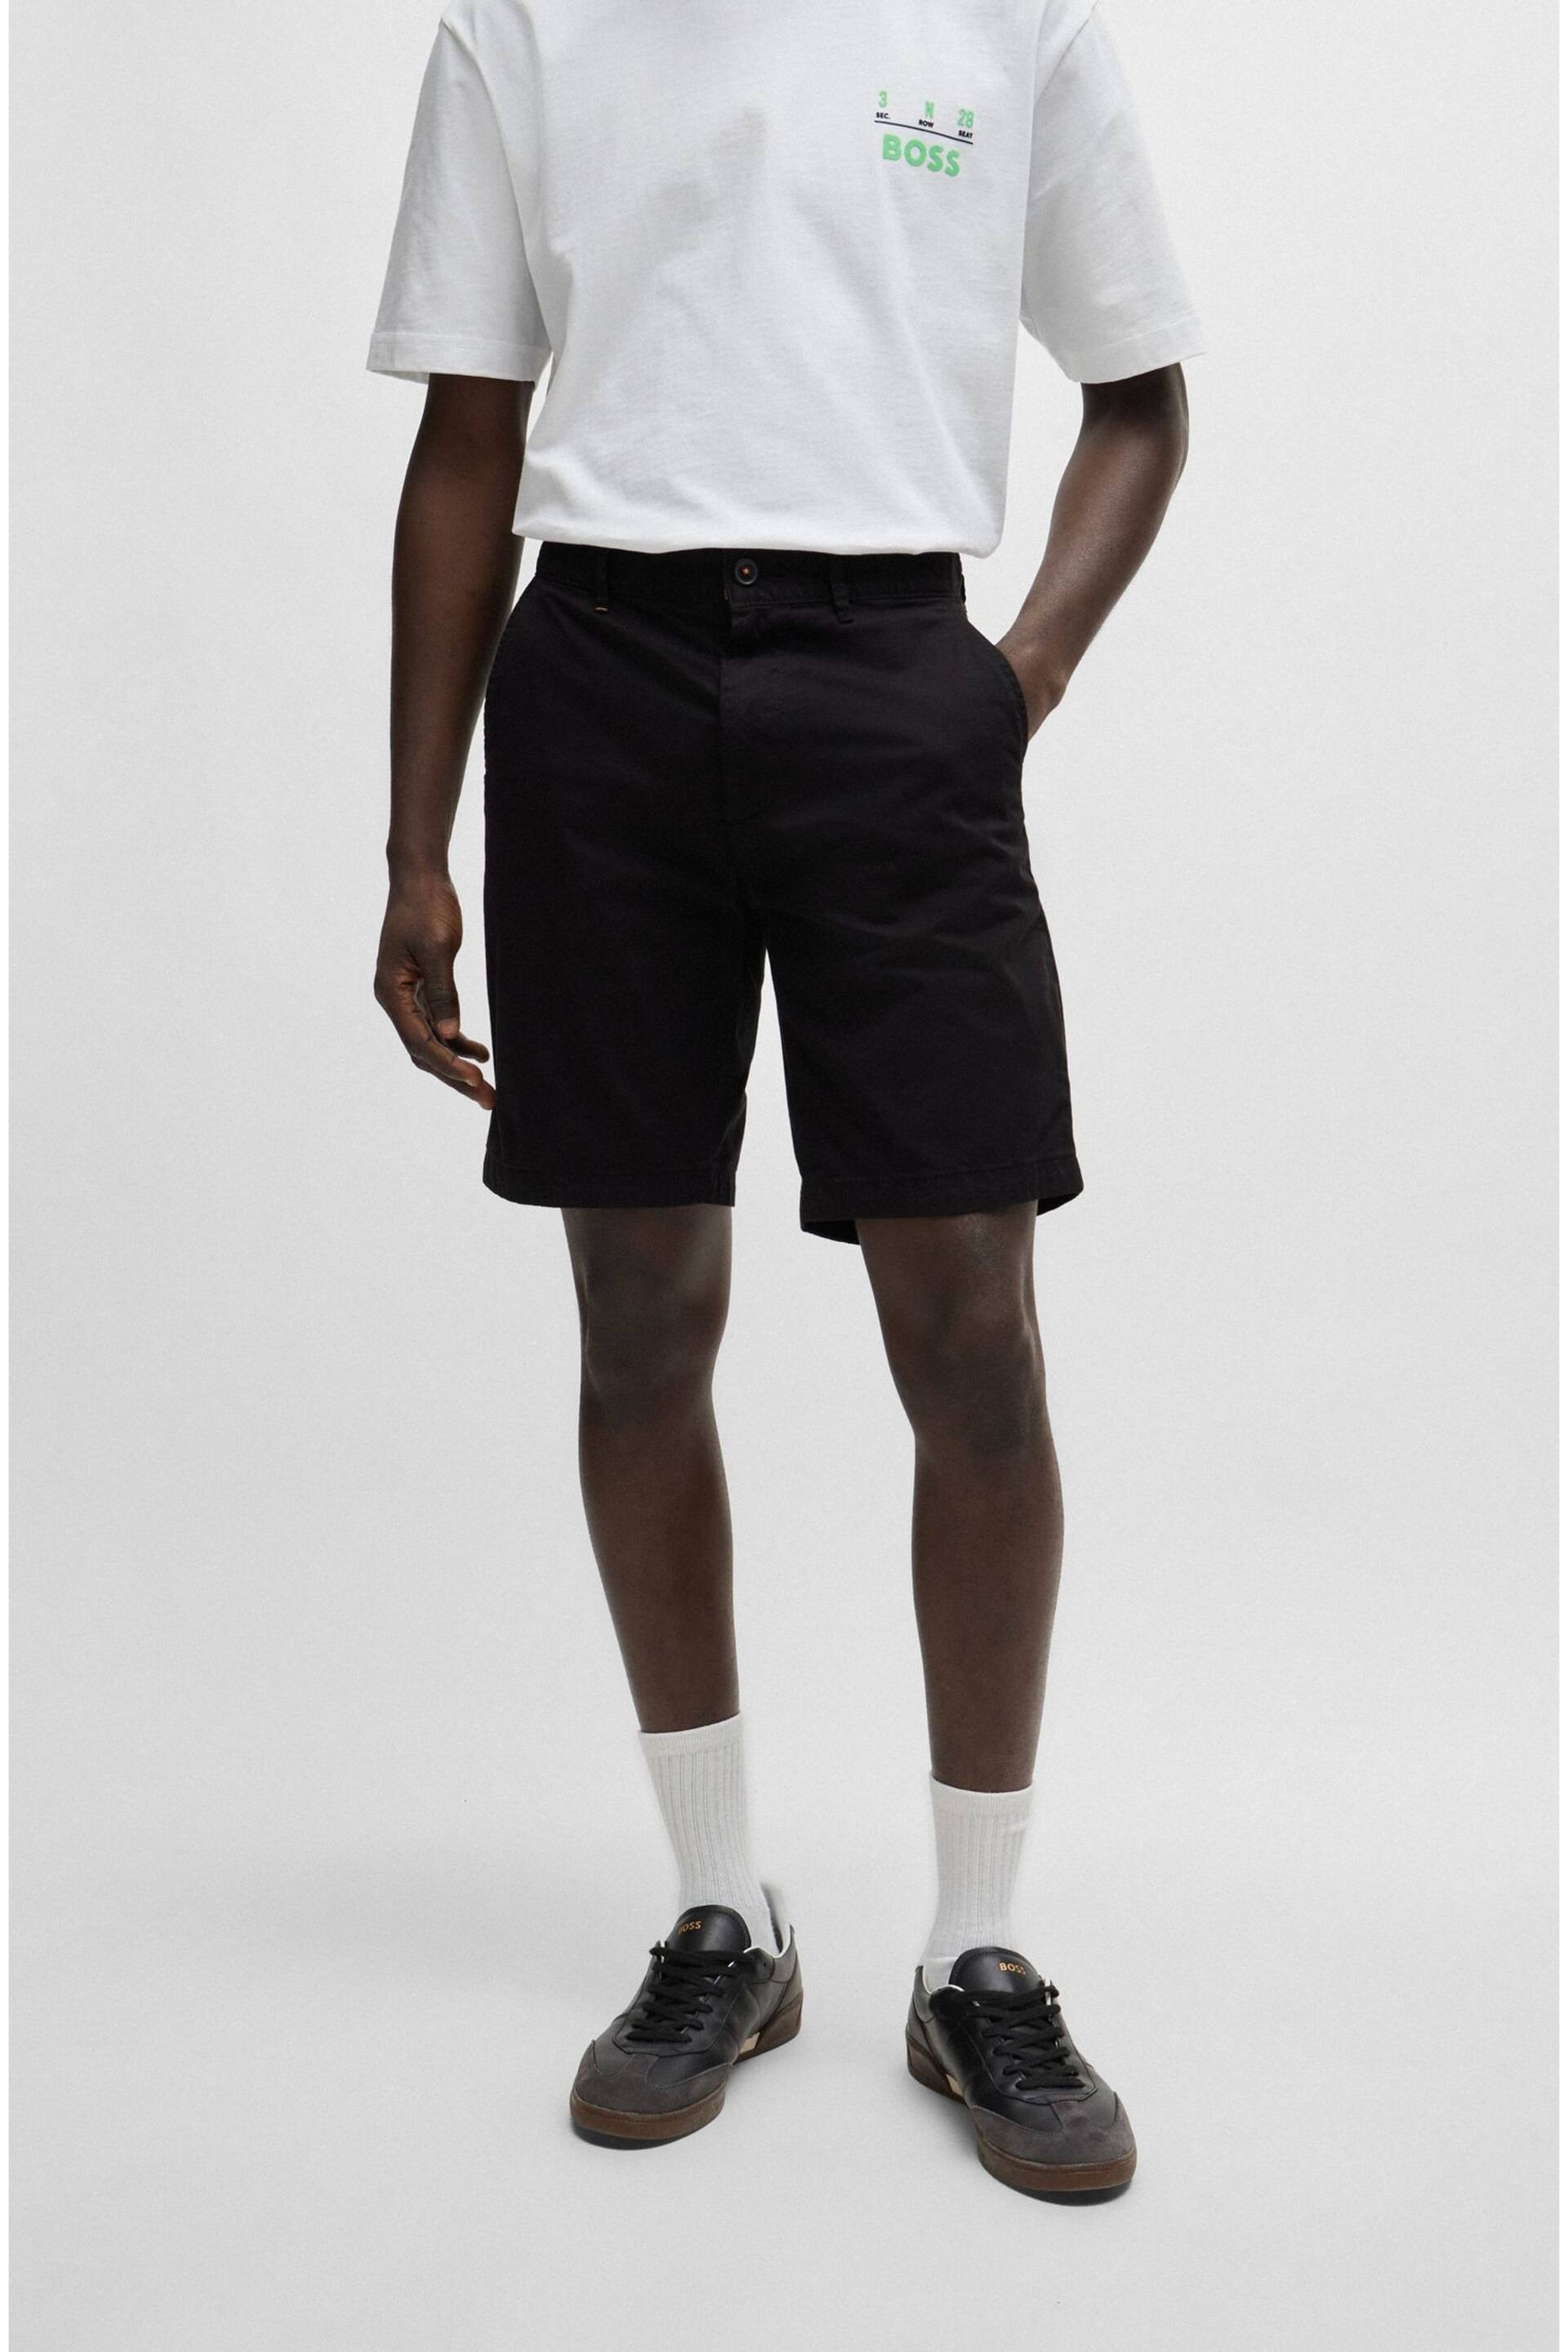 BOSS Black Slim Fit Stretch Cotton Chino Shorts - Image 1 of 5